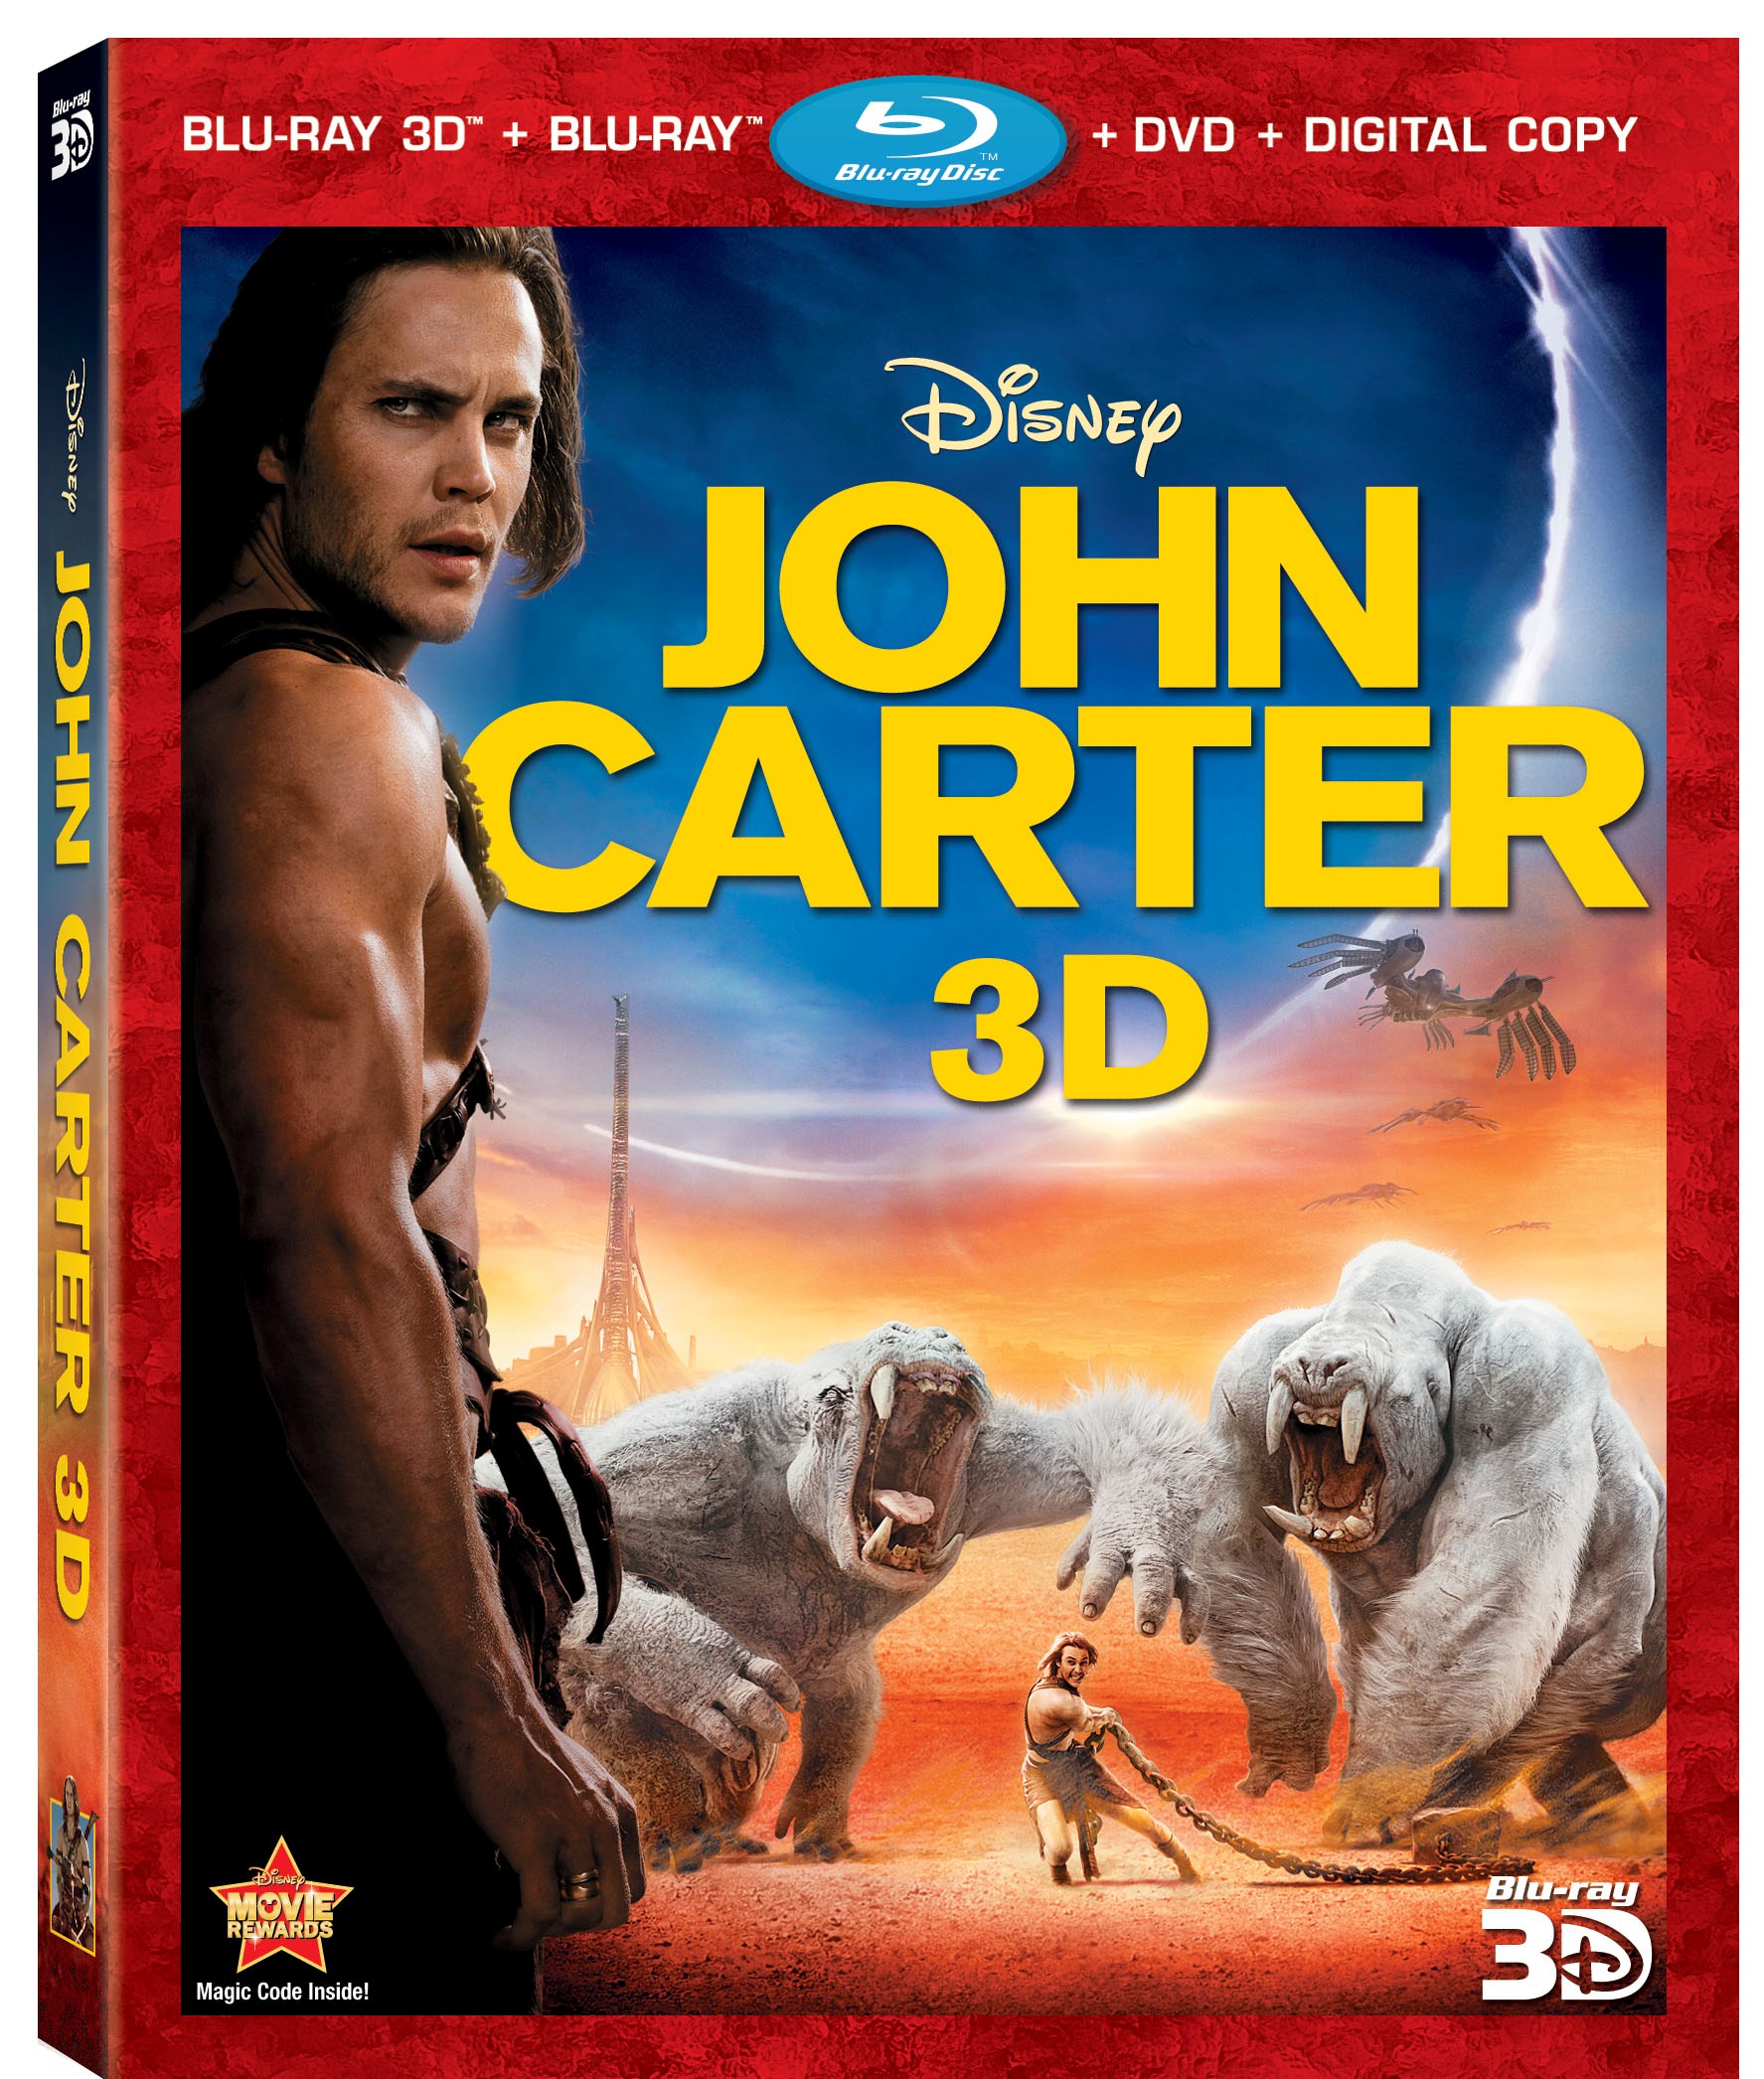 John Carter Full Movie 500mb - connectorfasr